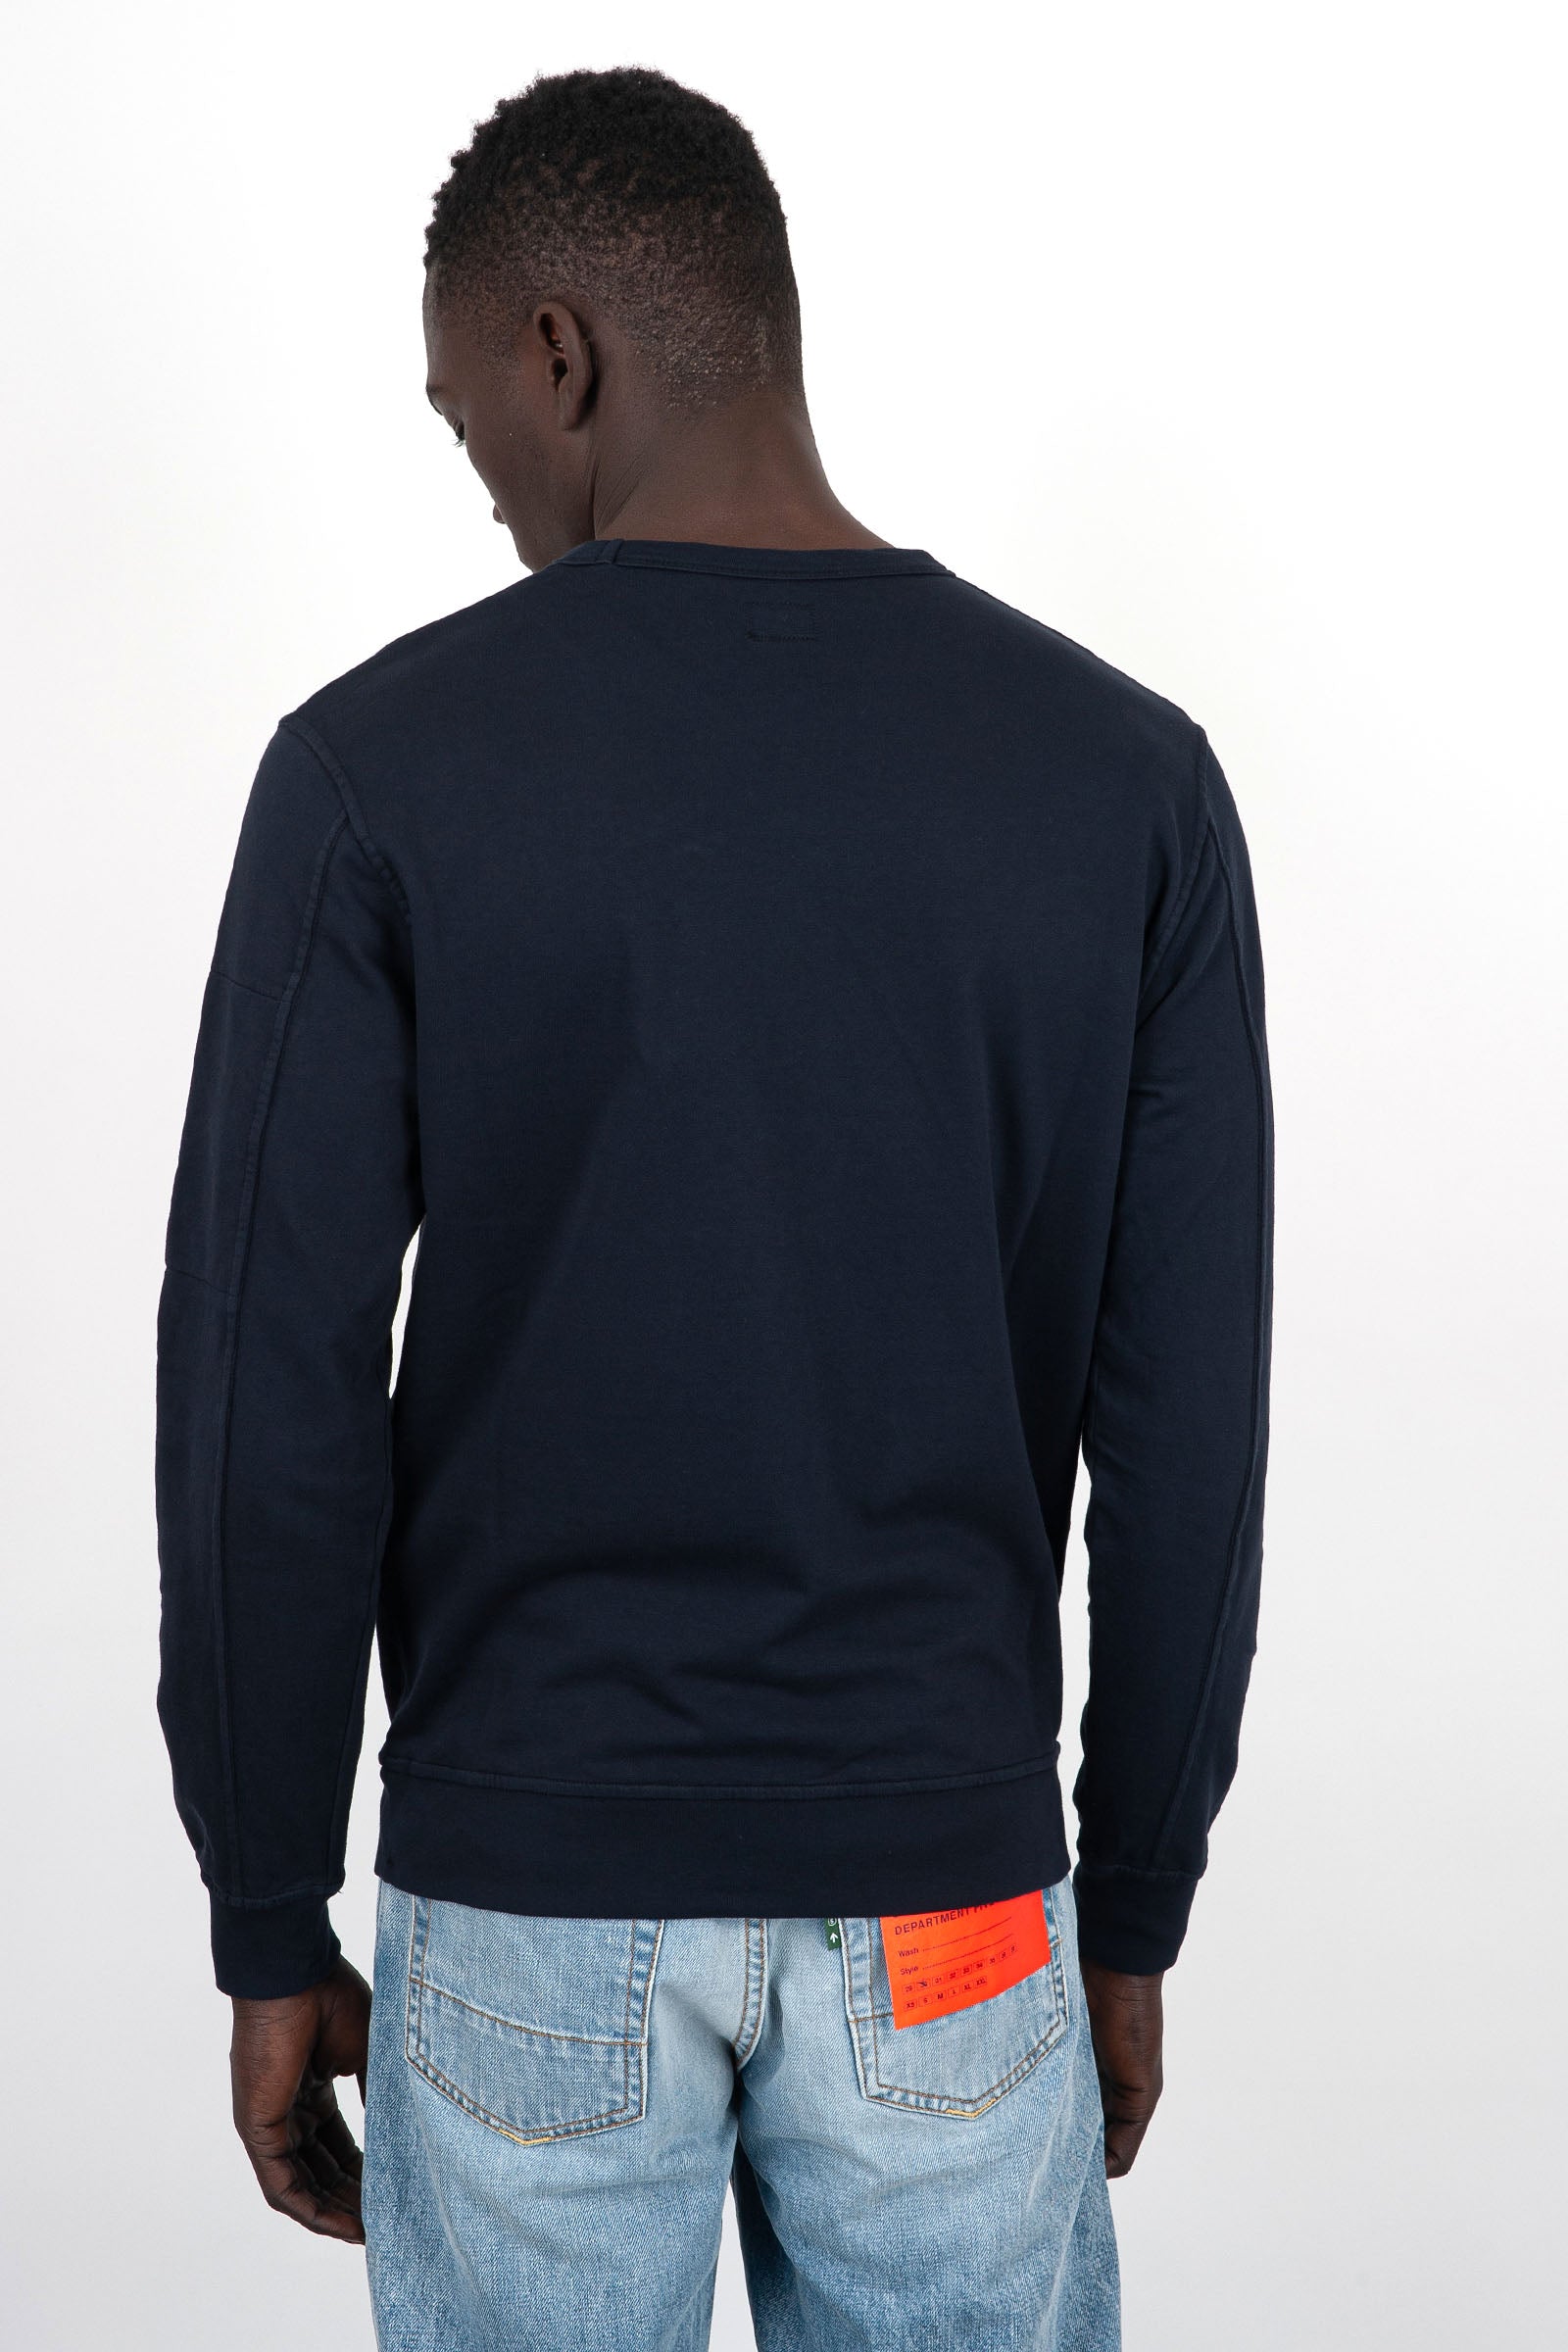 C.P. Company Sweatshirt Light Fleece Cotton Blue - 4